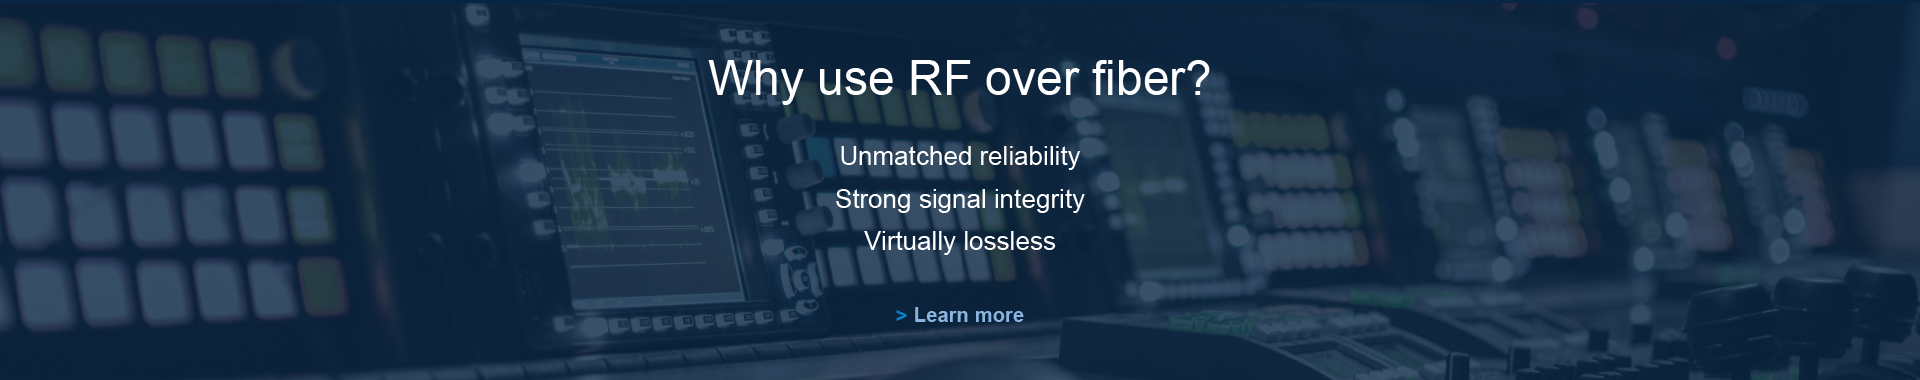 Why use RF over fiber?